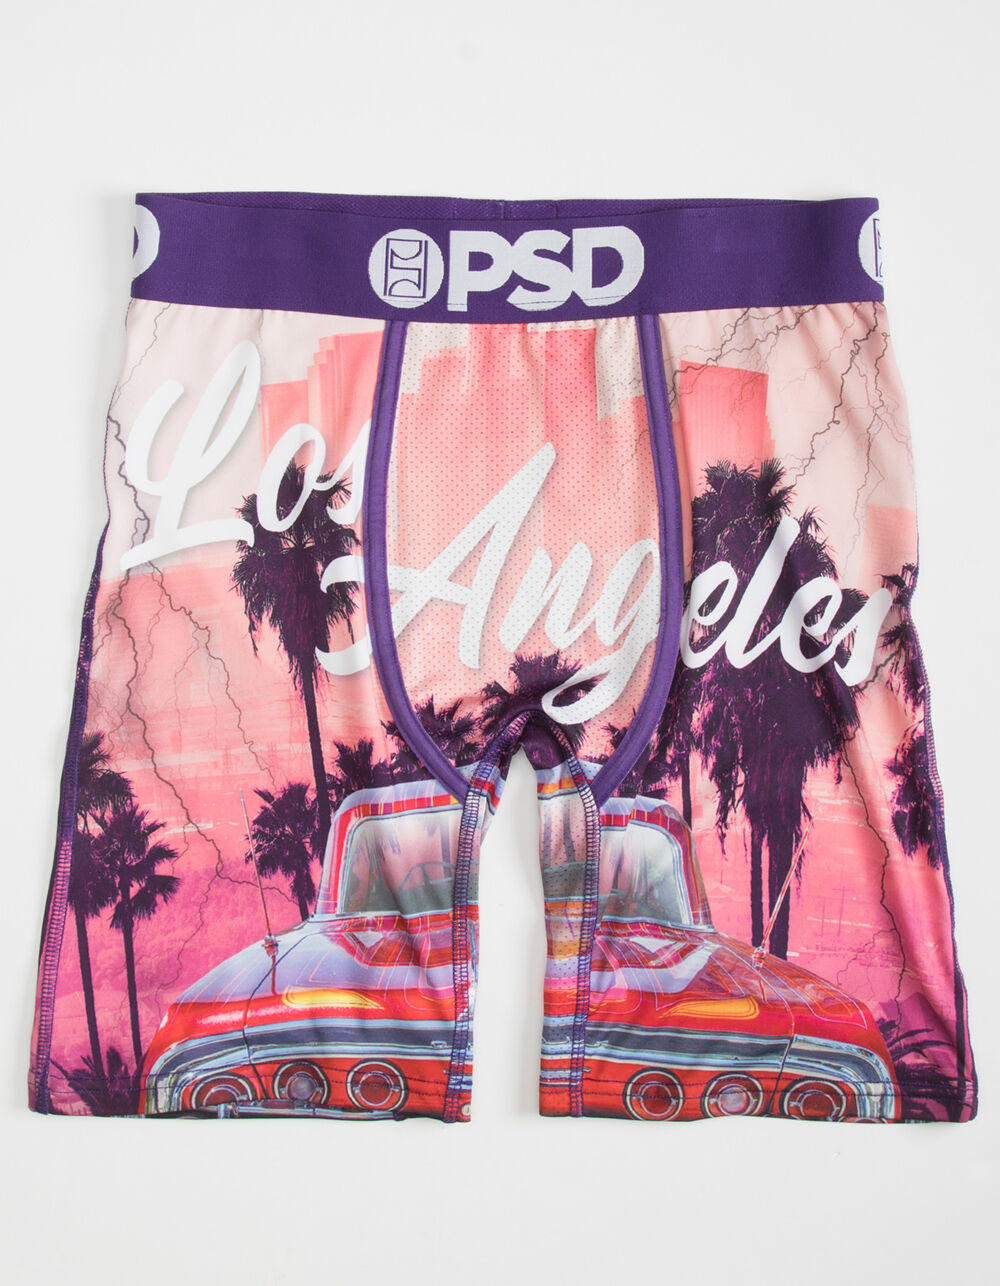 PSD Underwear Men's Boxer Briefs (Black/Vice City/XL)